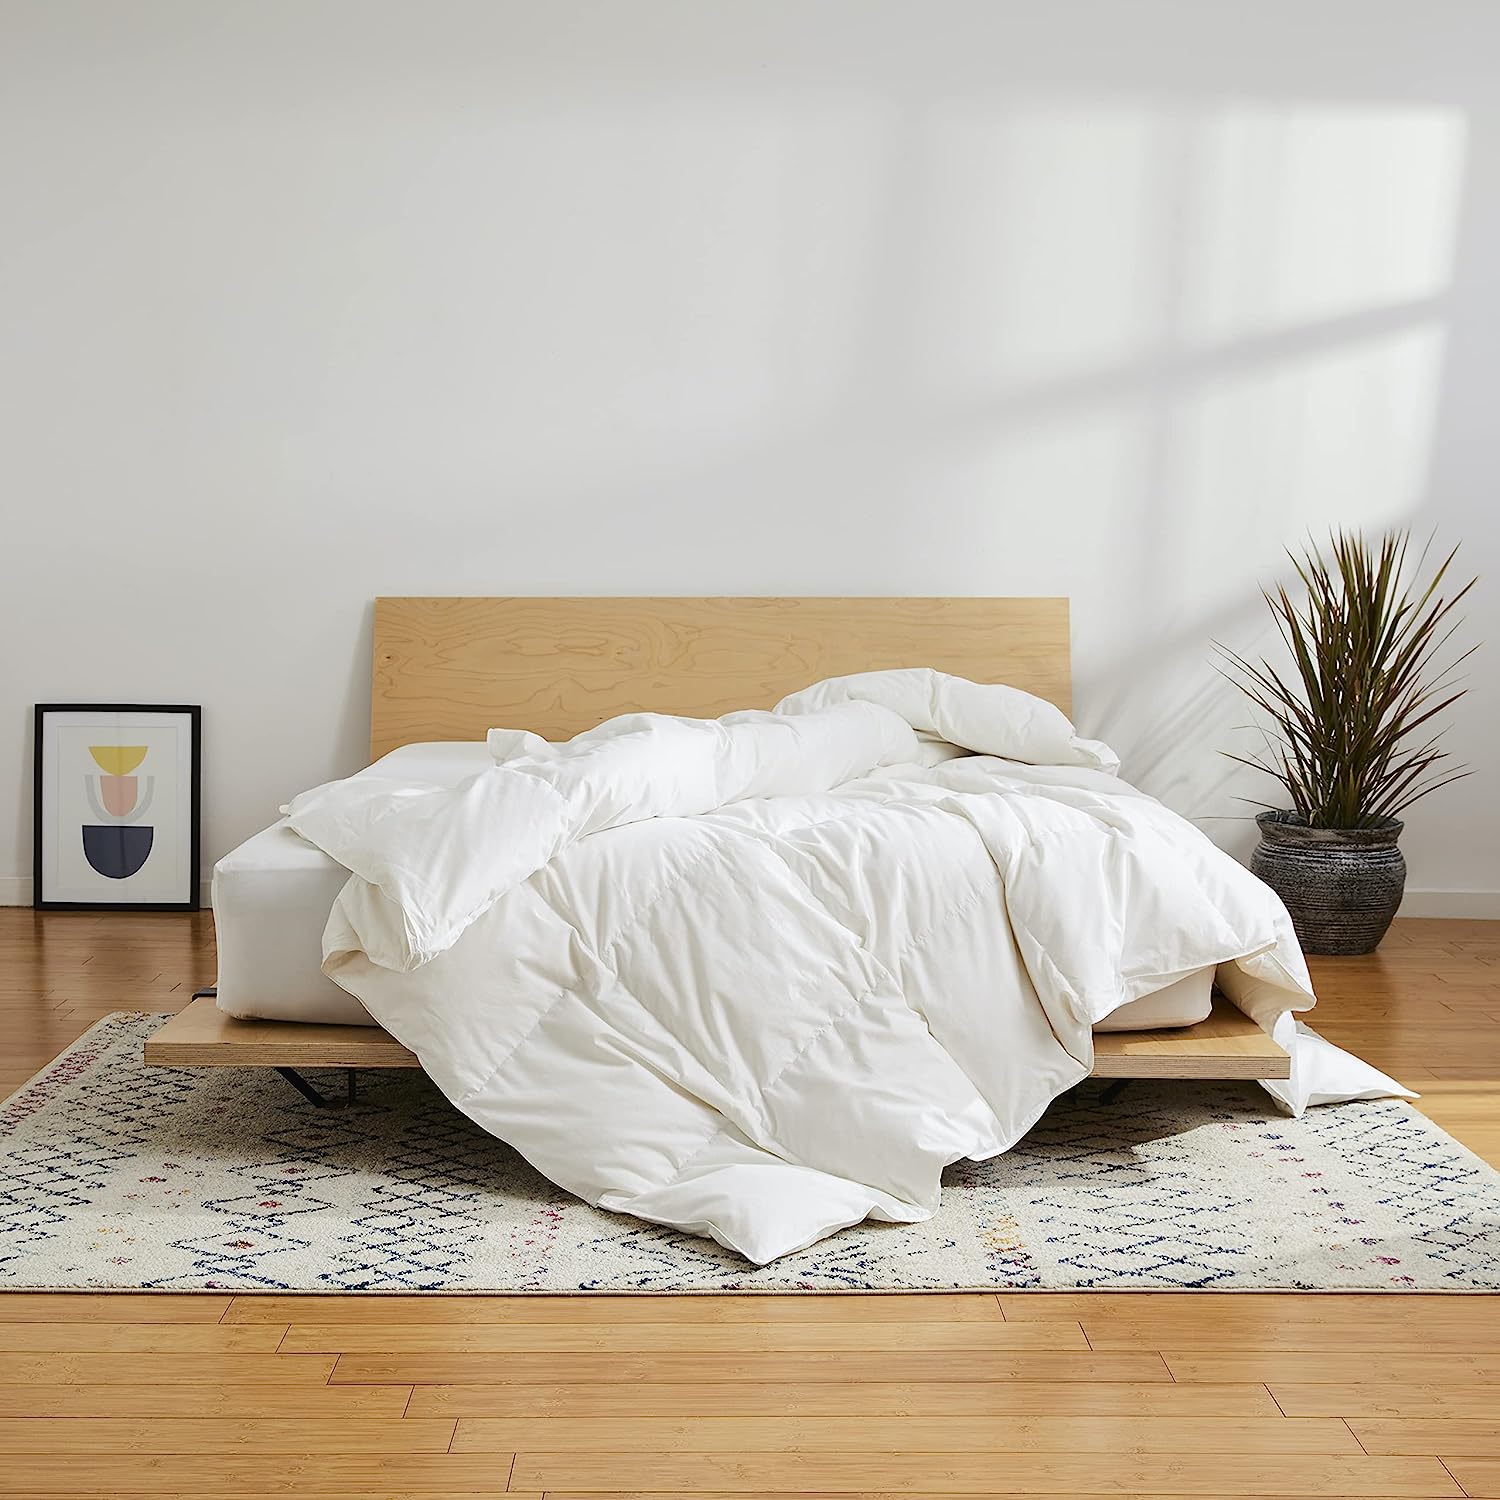 Brooklinen Down Comforter Review -Comfortable And Practical